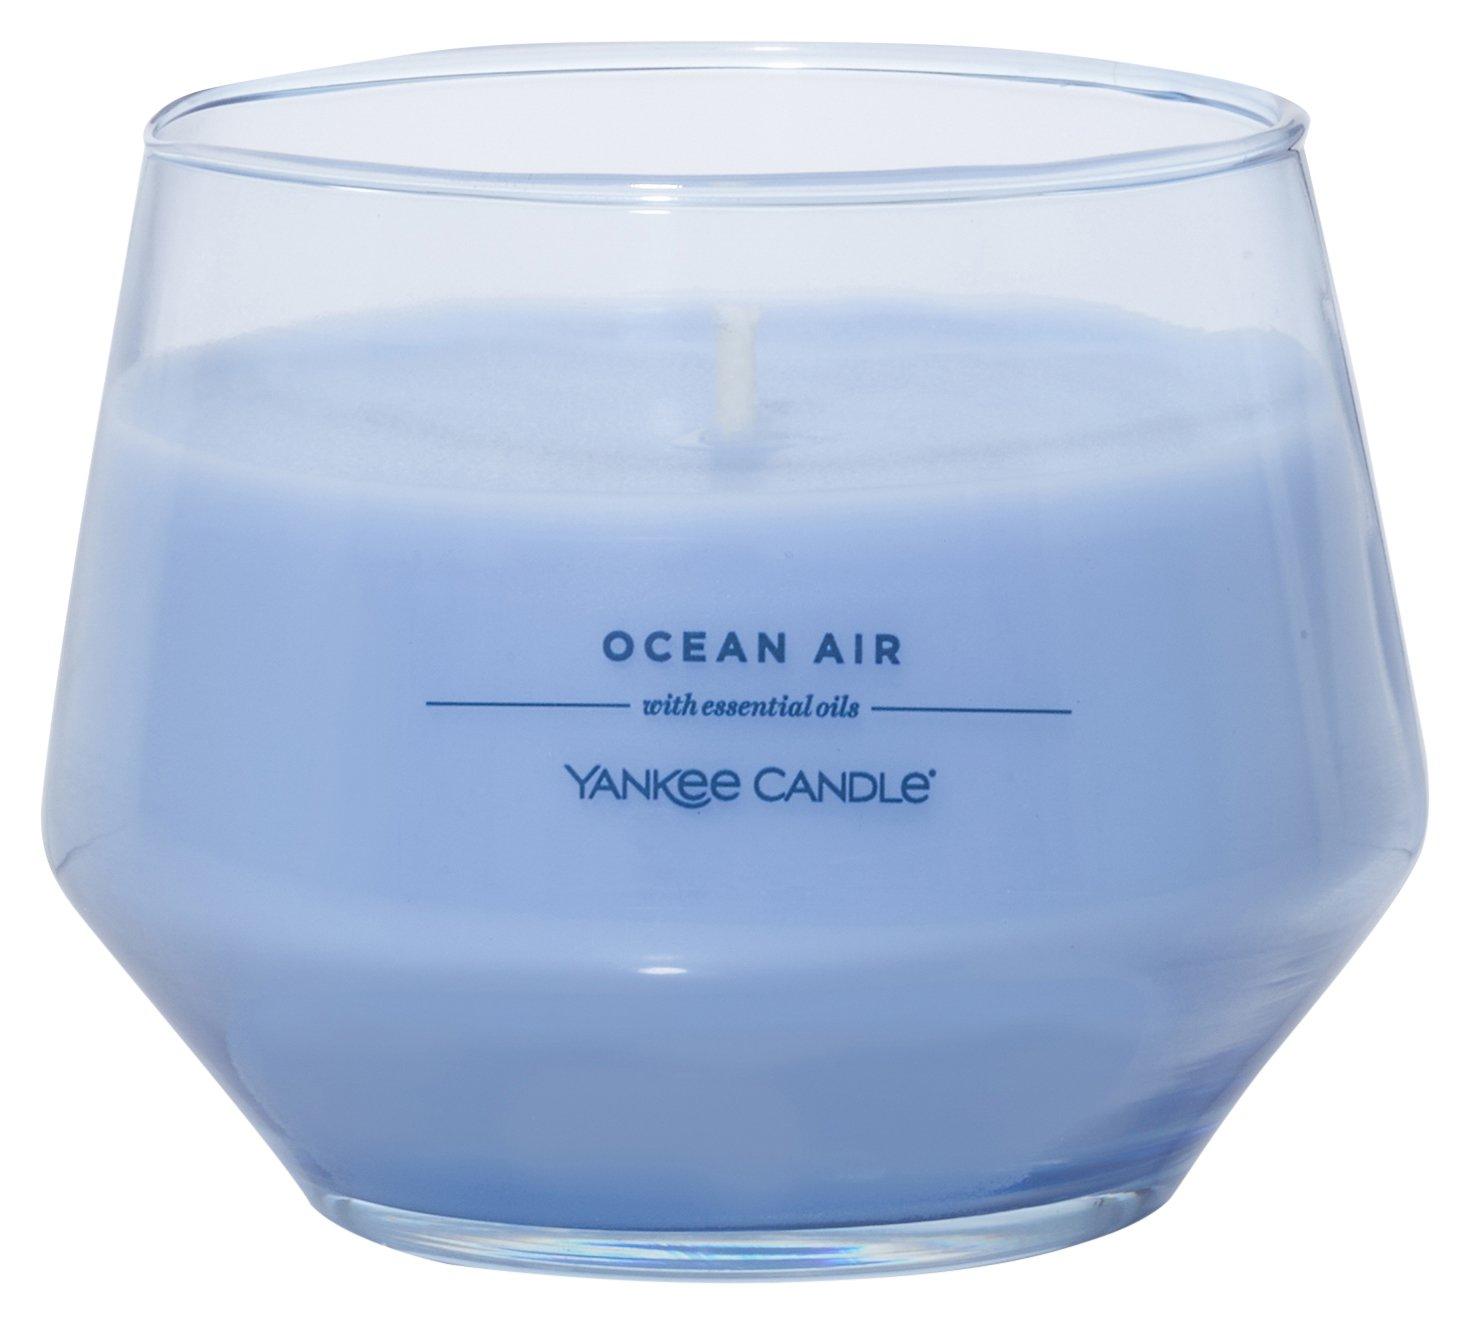 Yankee Candle 10oz Ocean Air Candle